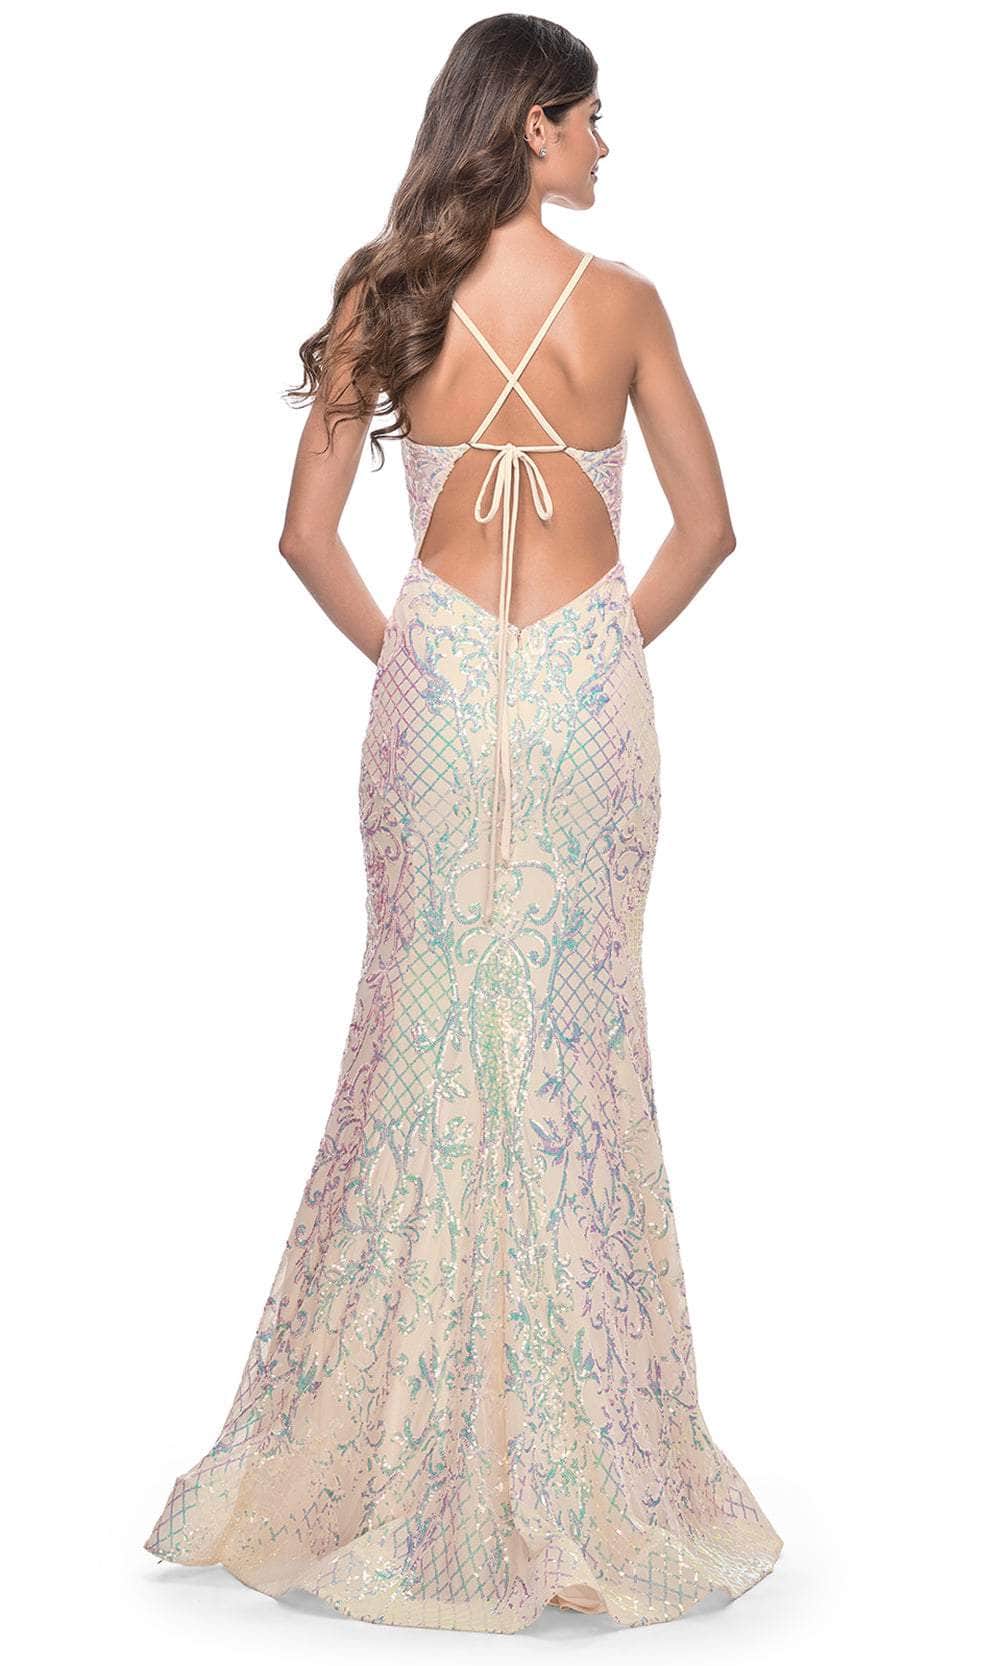 La Femme 31943 - Sequin Mermaid Prom Dress Prom Dresses